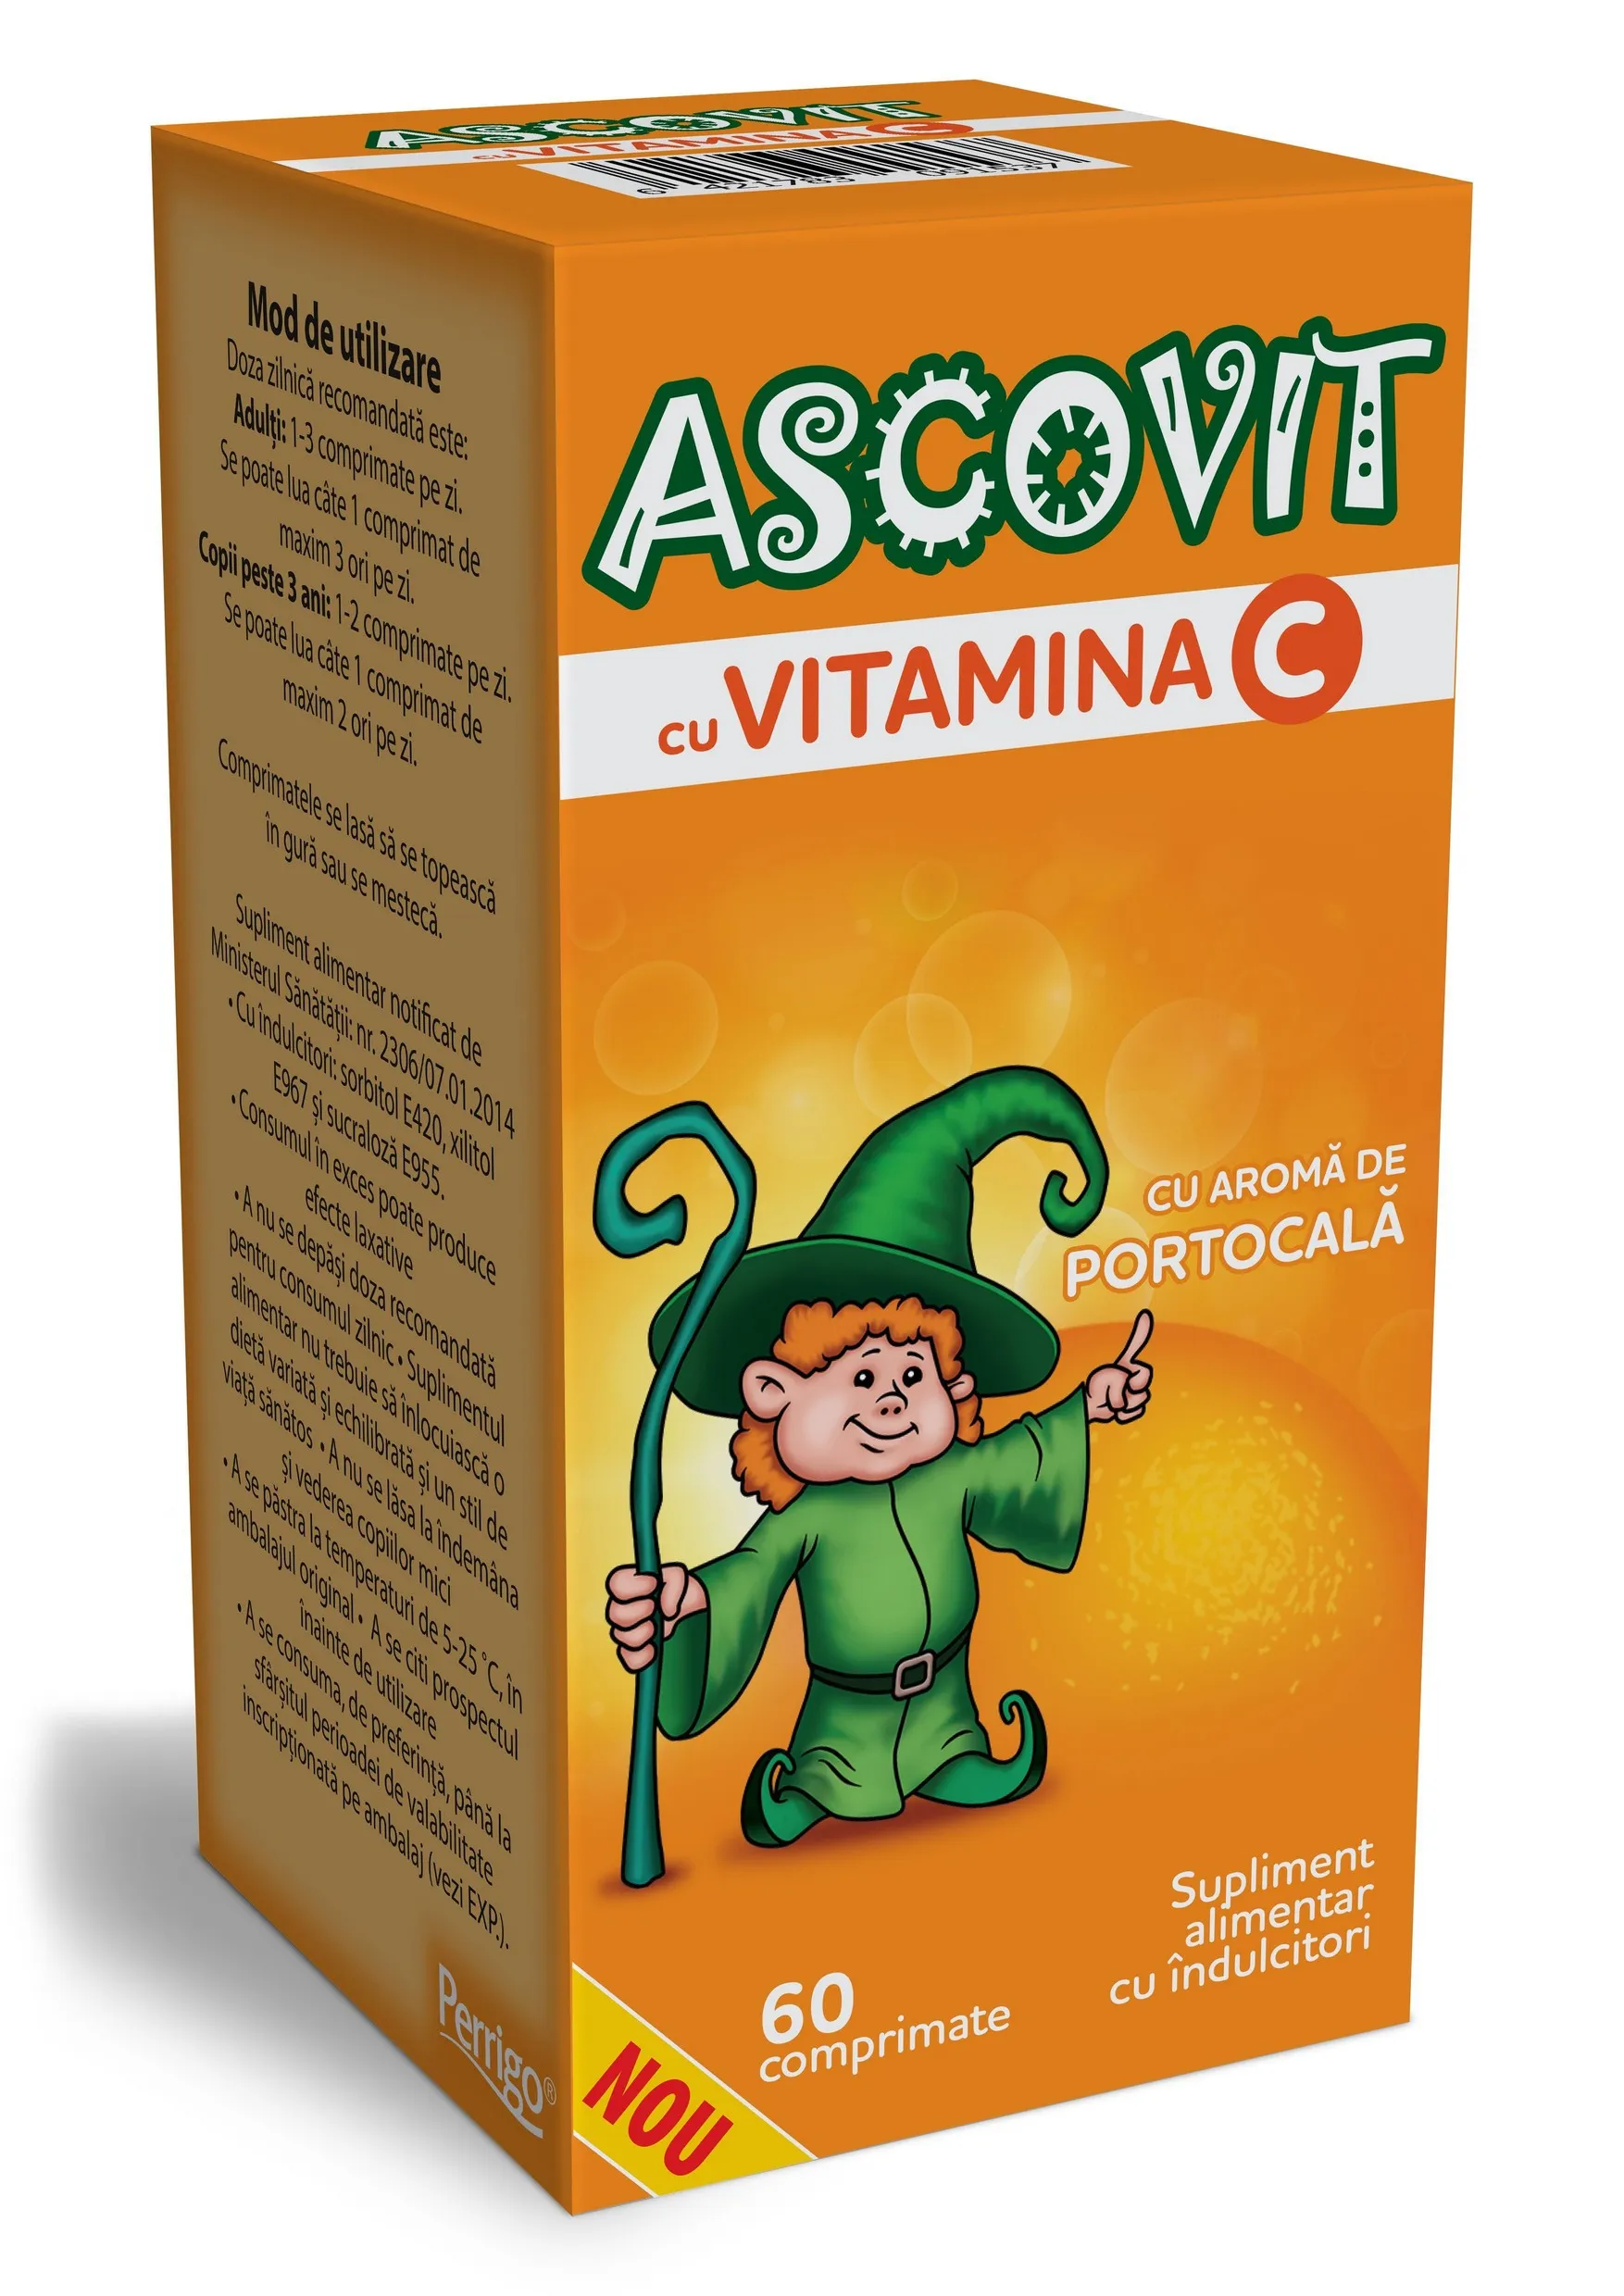 Ascovit 100 mg x 60 comprimate orange (Omega Pharma)